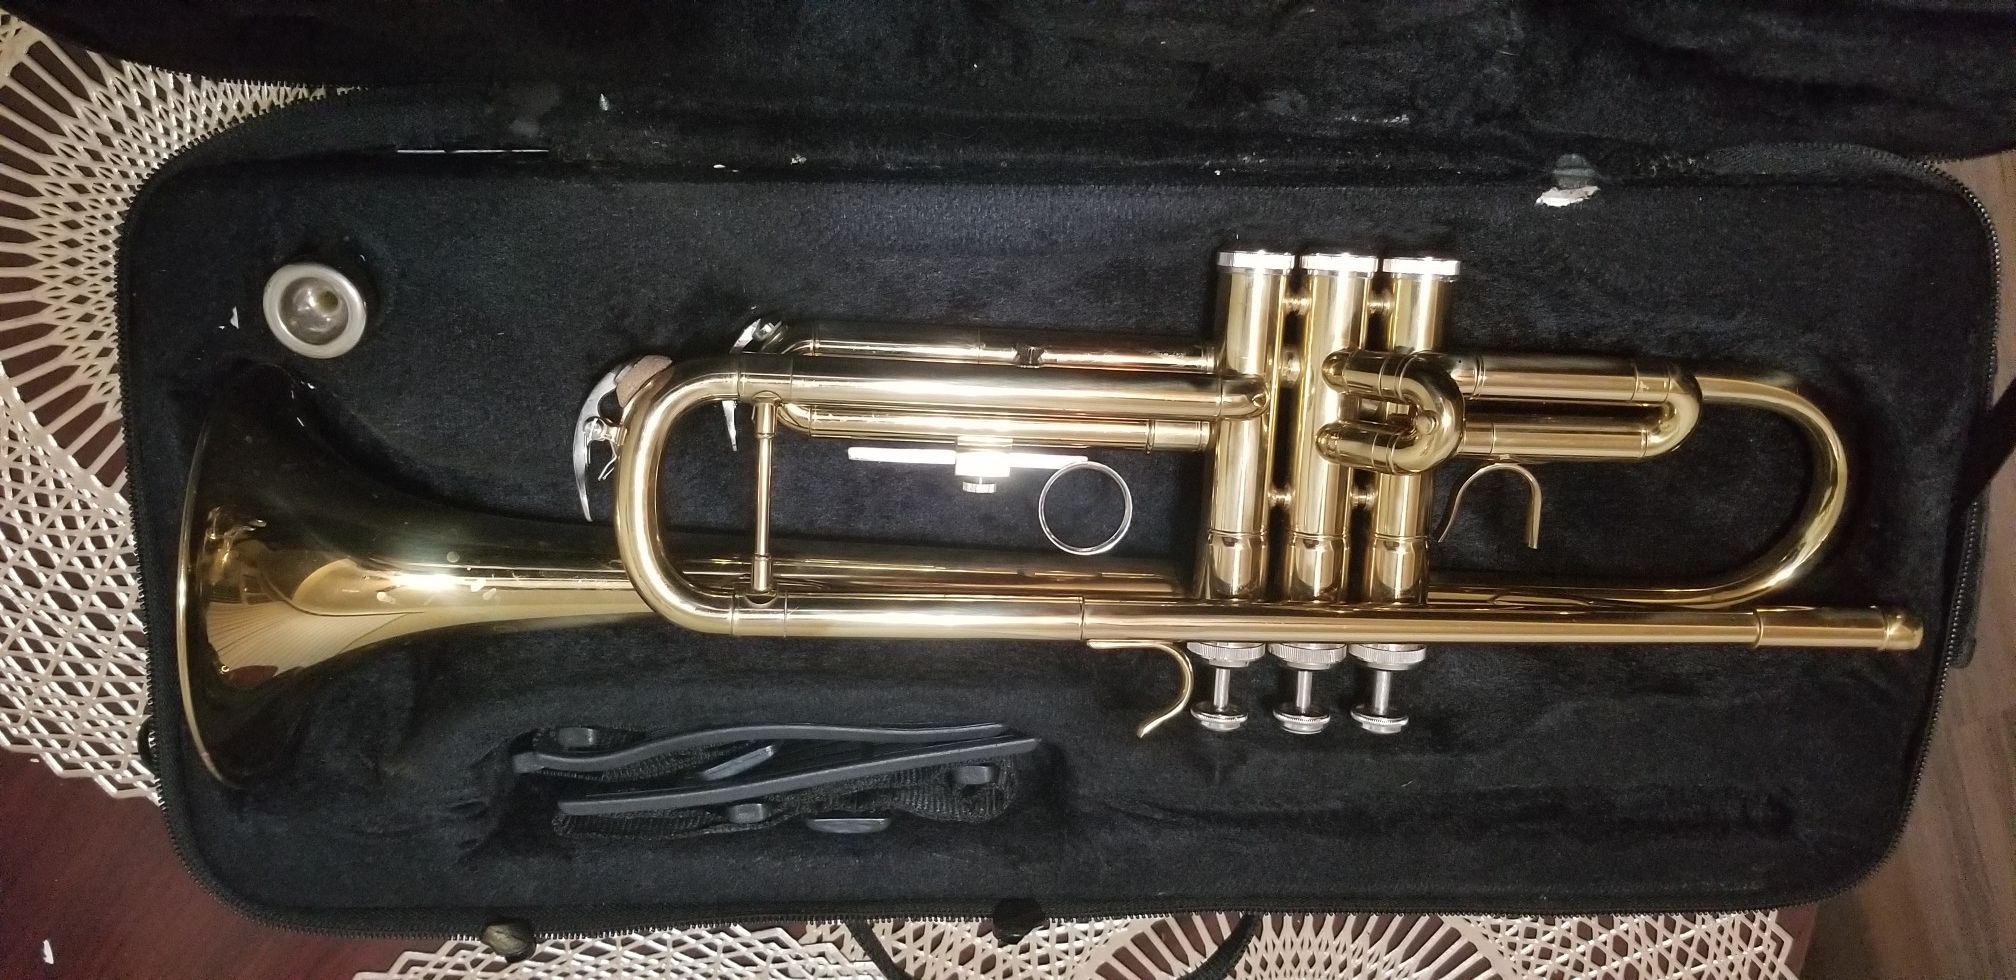 Gold trumpet +carry case +mouthpiece $90